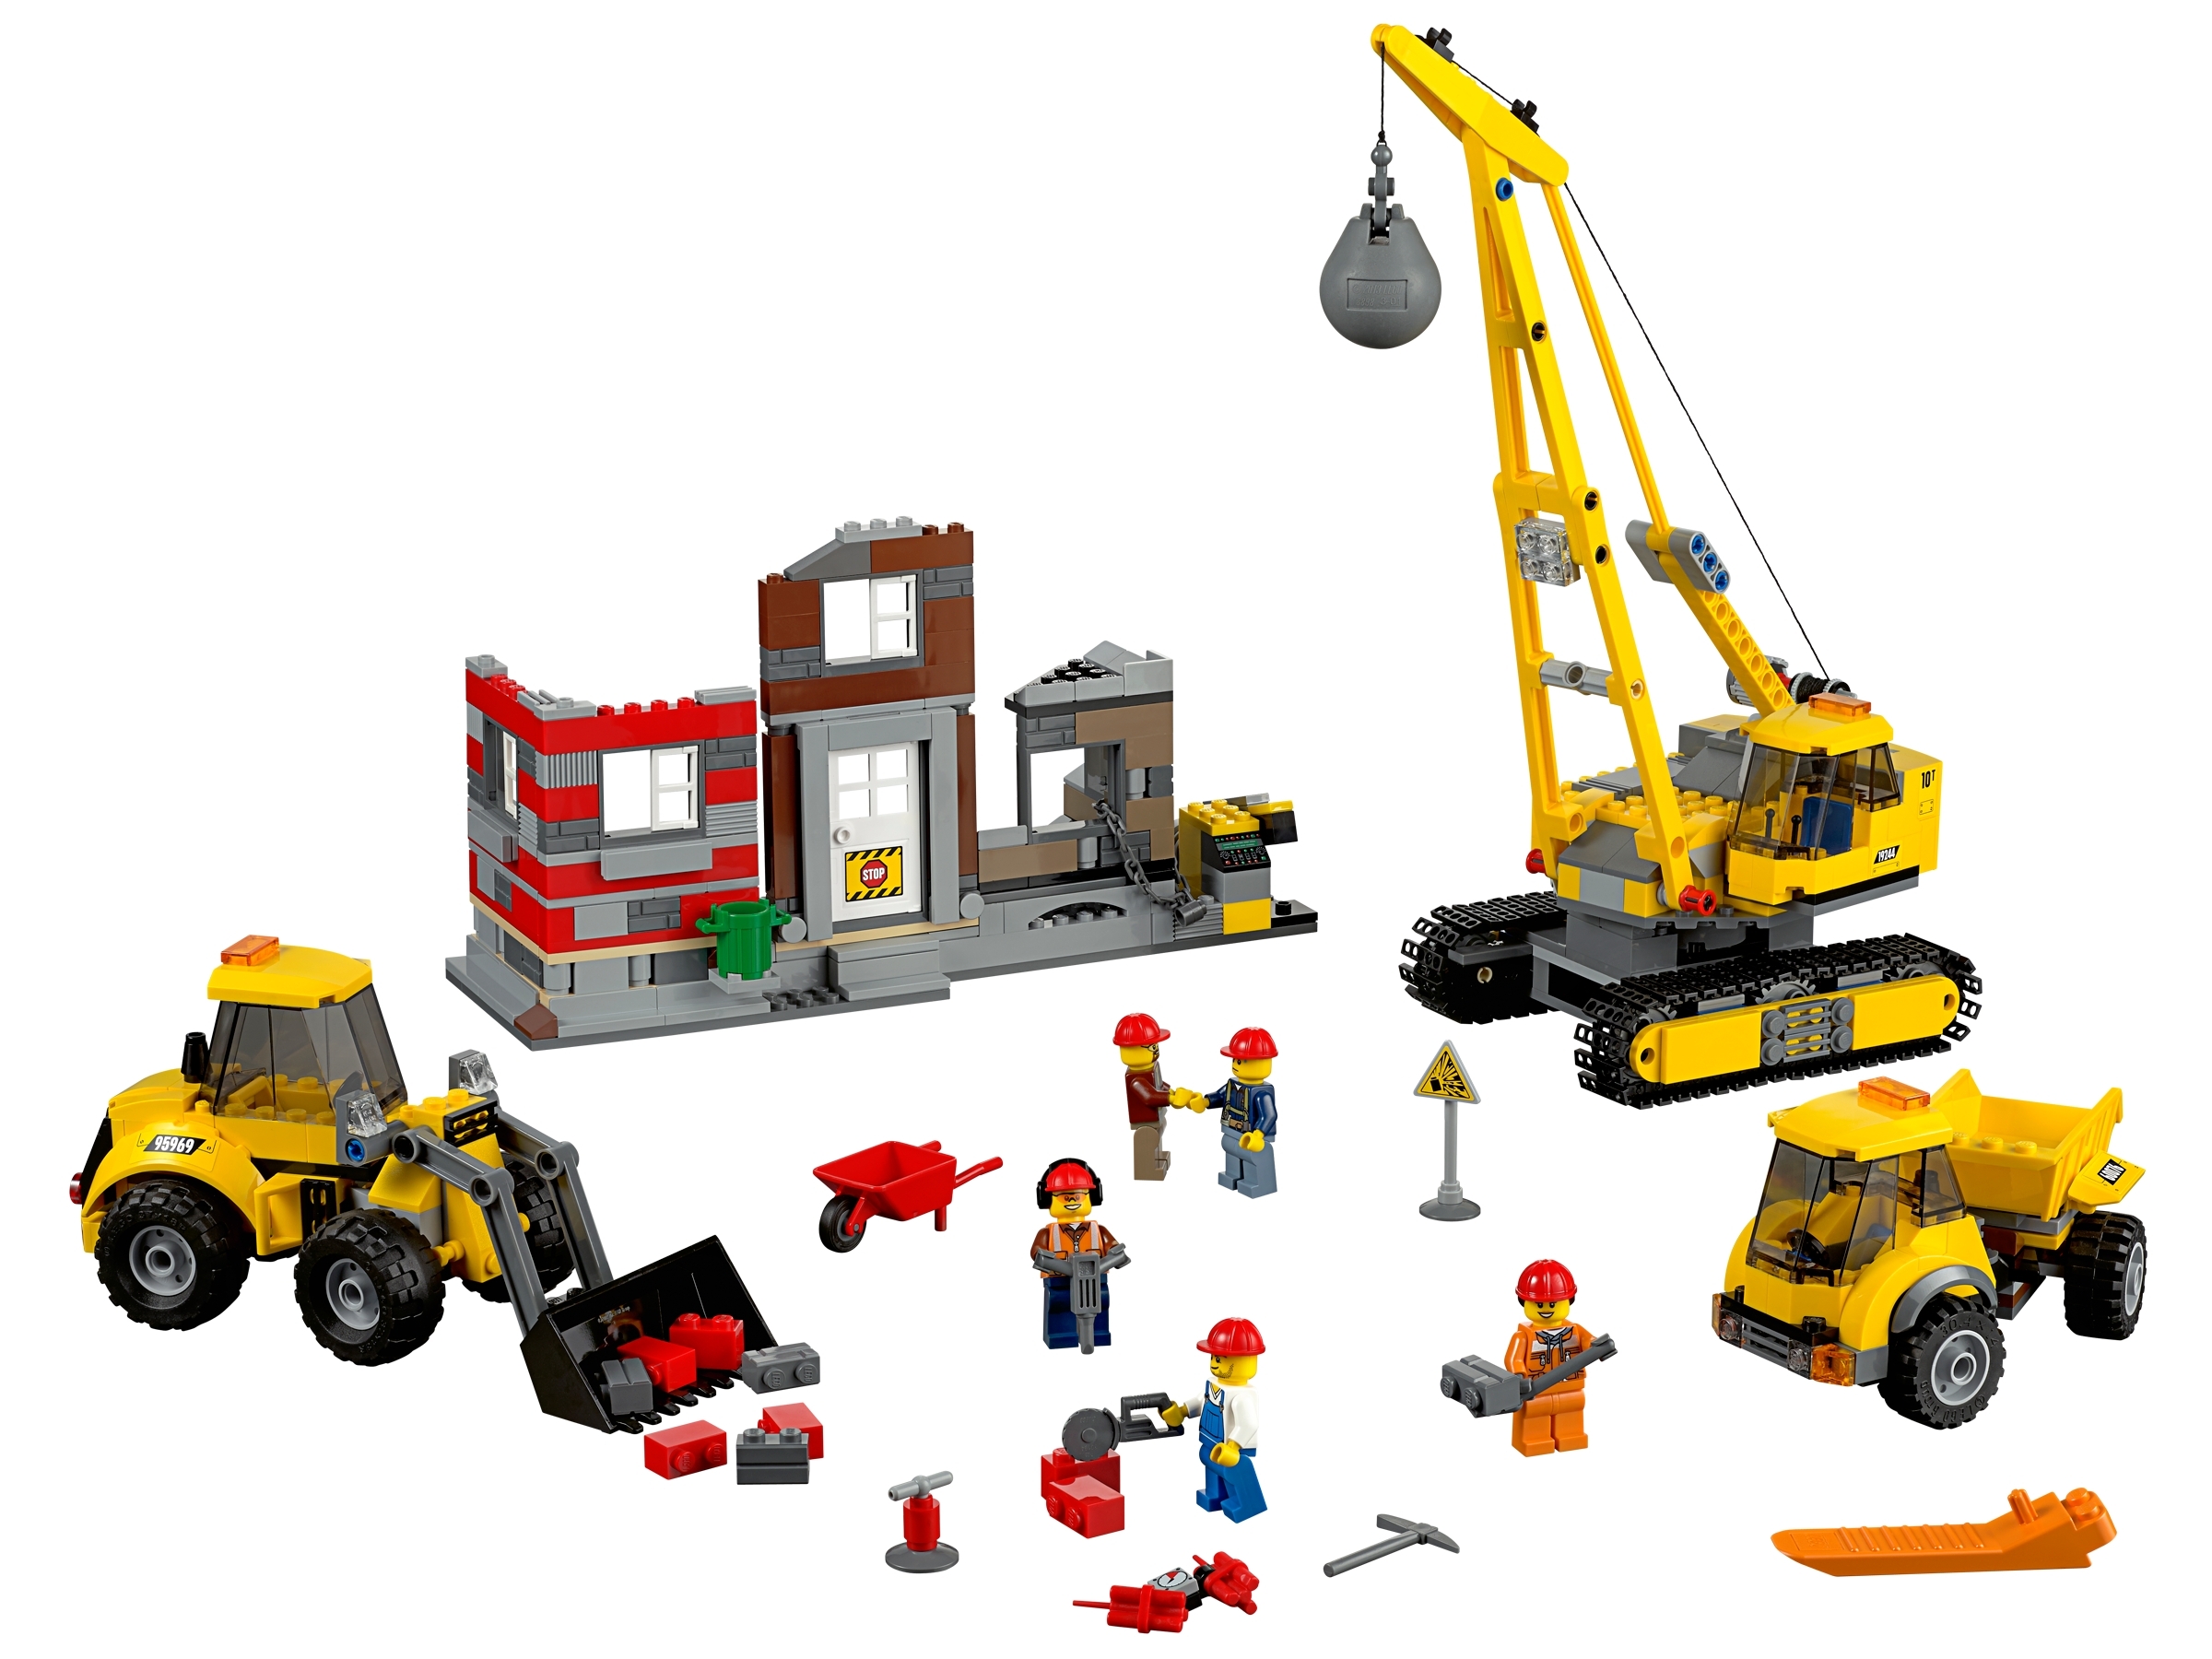 Whitney glas overraskelse Demolition Site 60076 | City | Buy online at the Official LEGO® Shop US